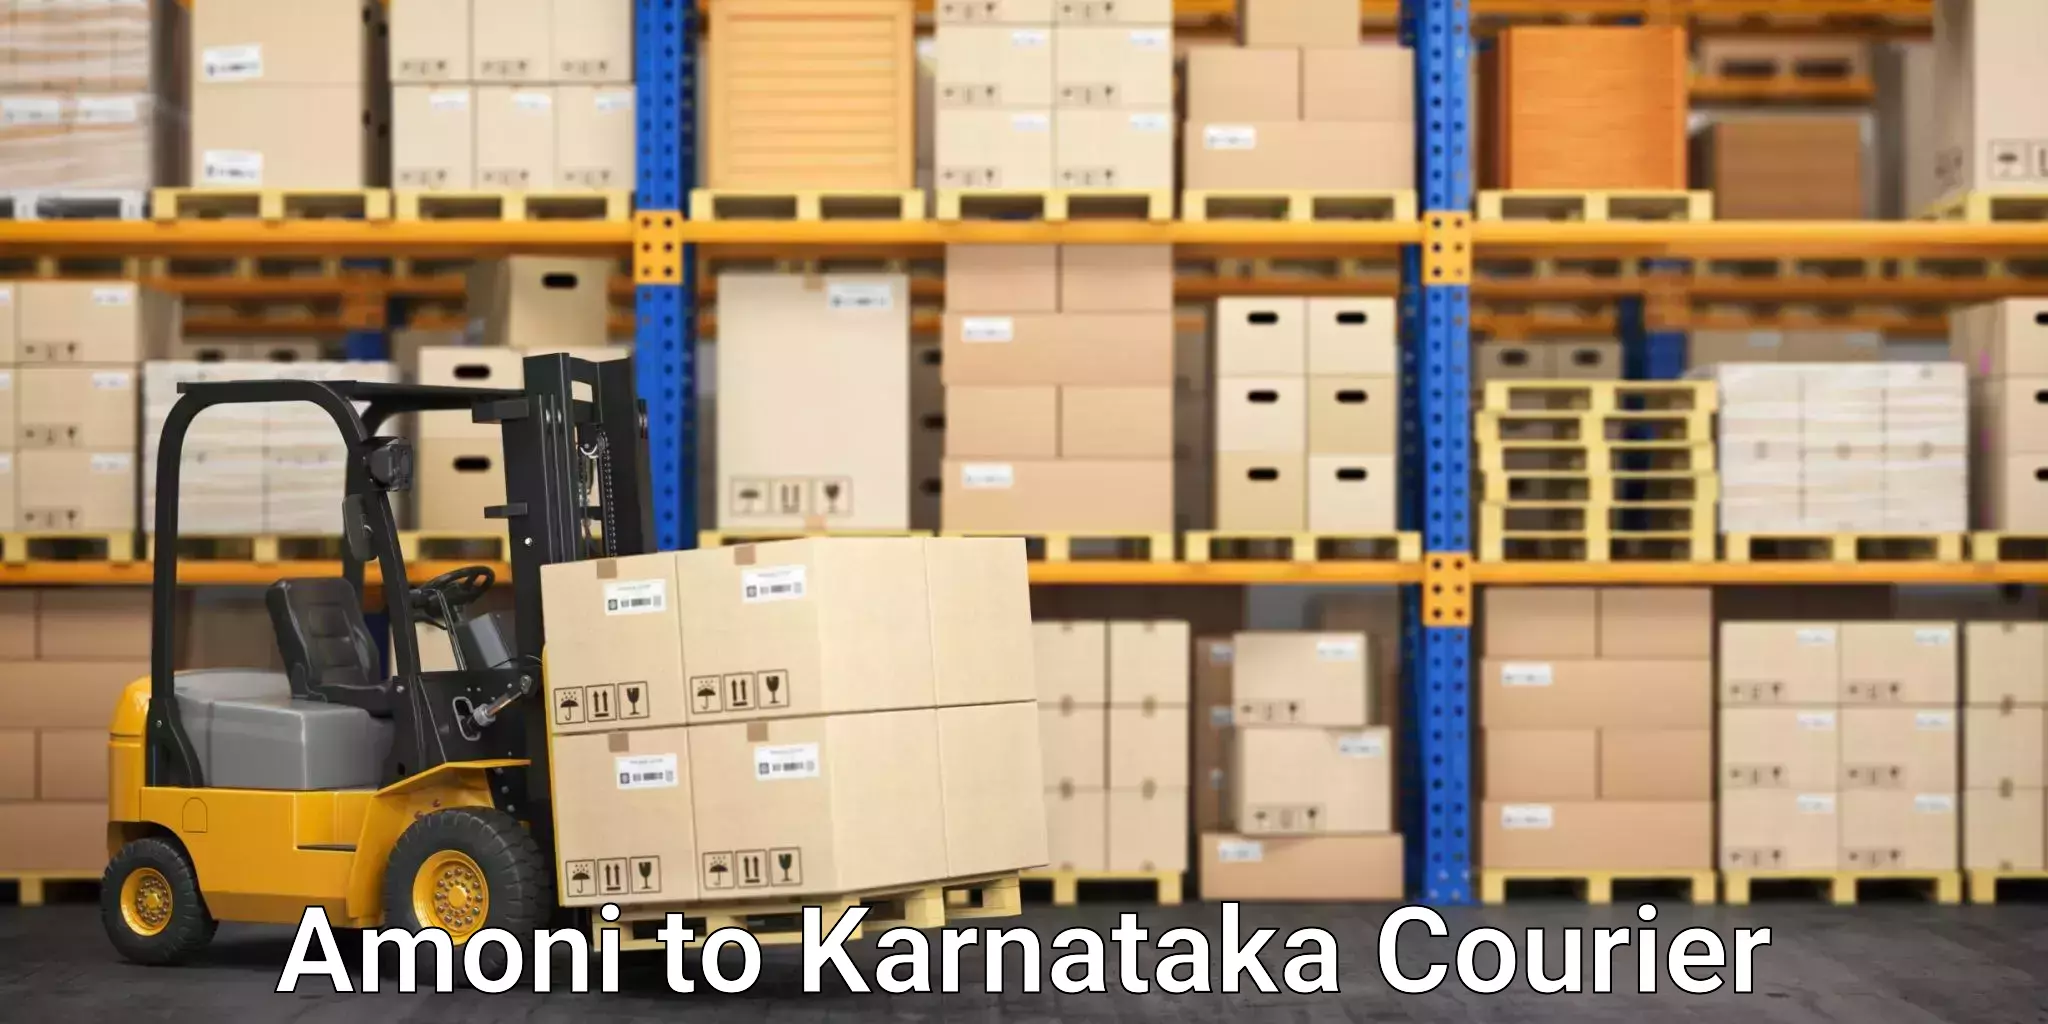 Cash on delivery service Amoni to Karnataka